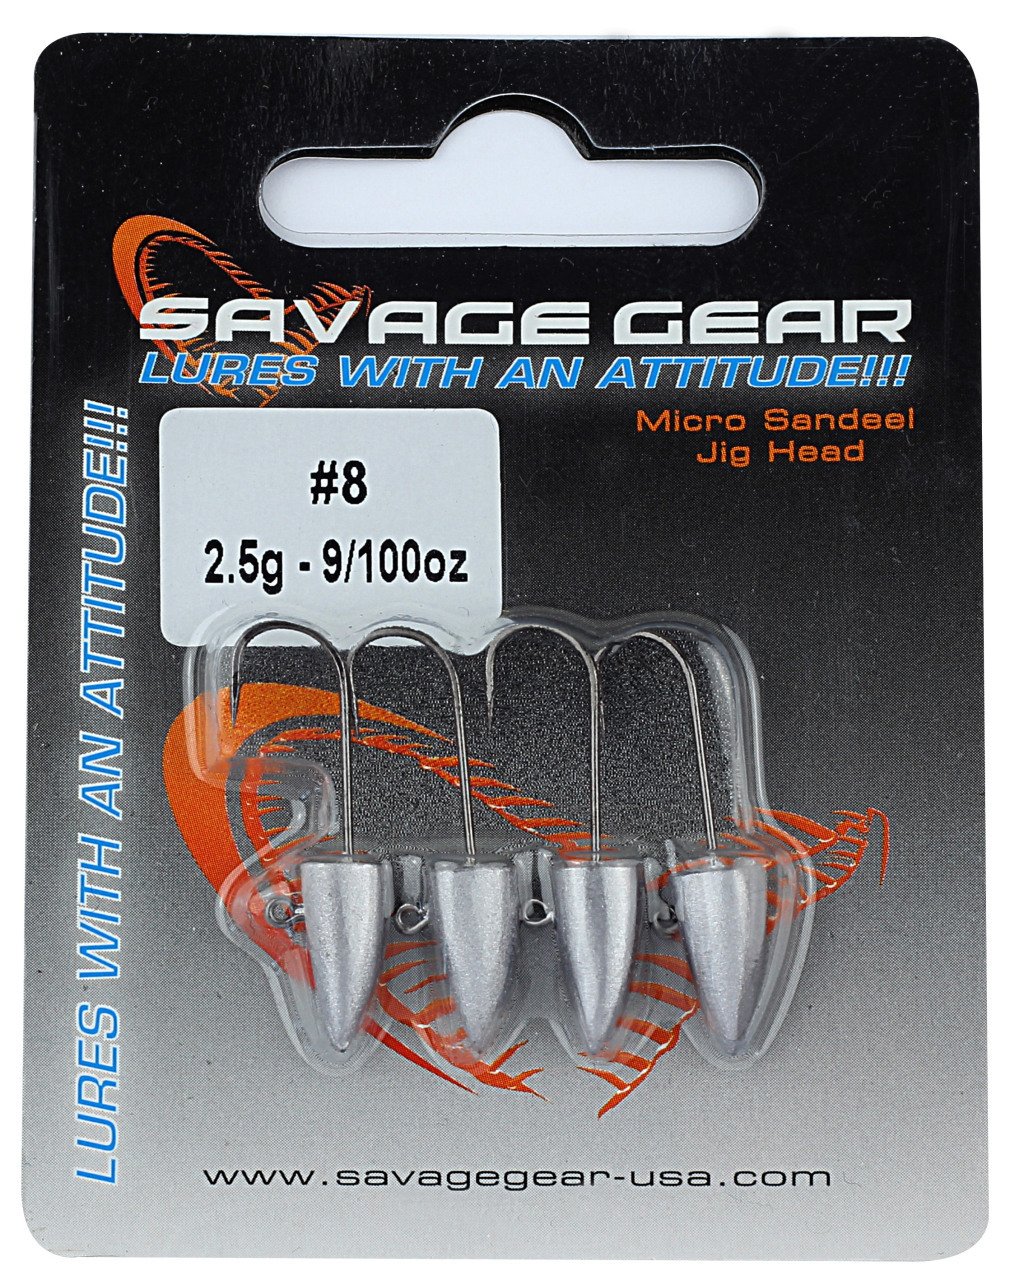 Savage gear LRF Micro sandeel jigghead 1.5g #8 4pcs